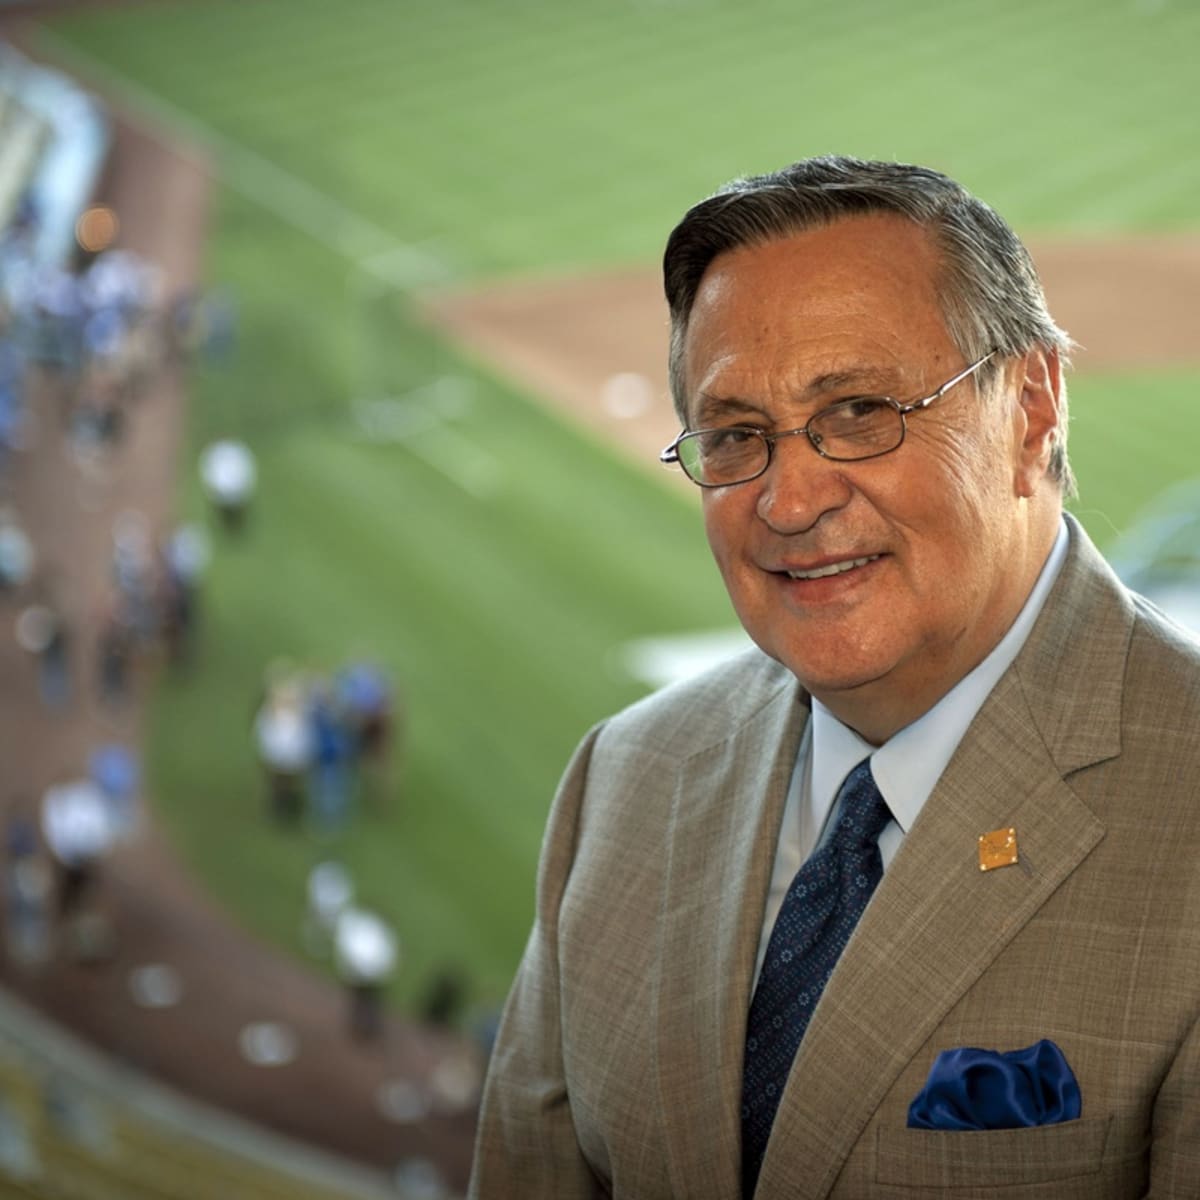 From Ecuador to Dodgers royalty, Jaime Jarrín helped bring